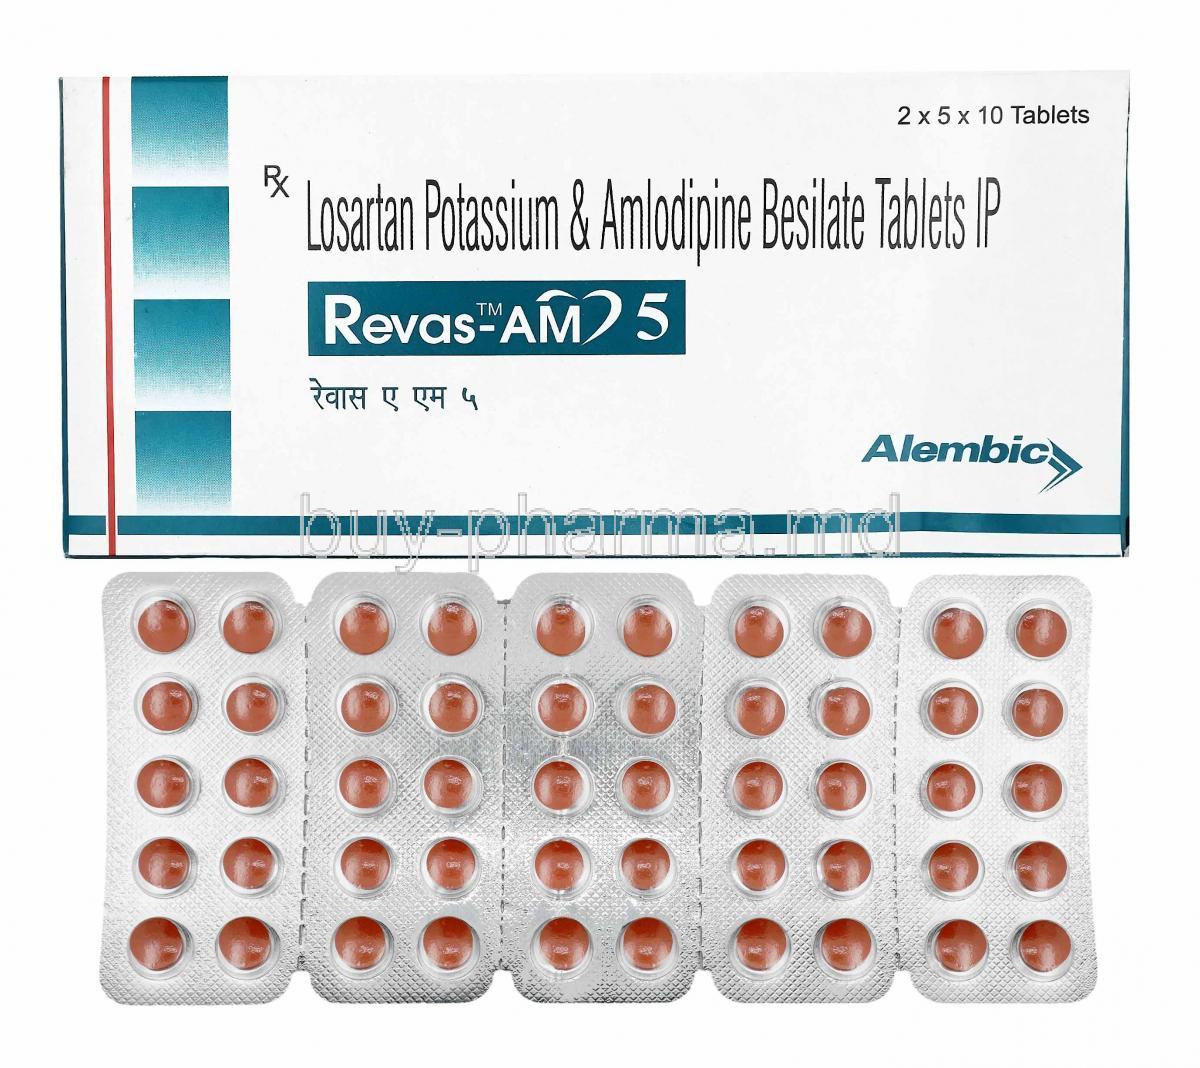 Revas-AM, Losartan and Amlodipine 5mg box and tablets